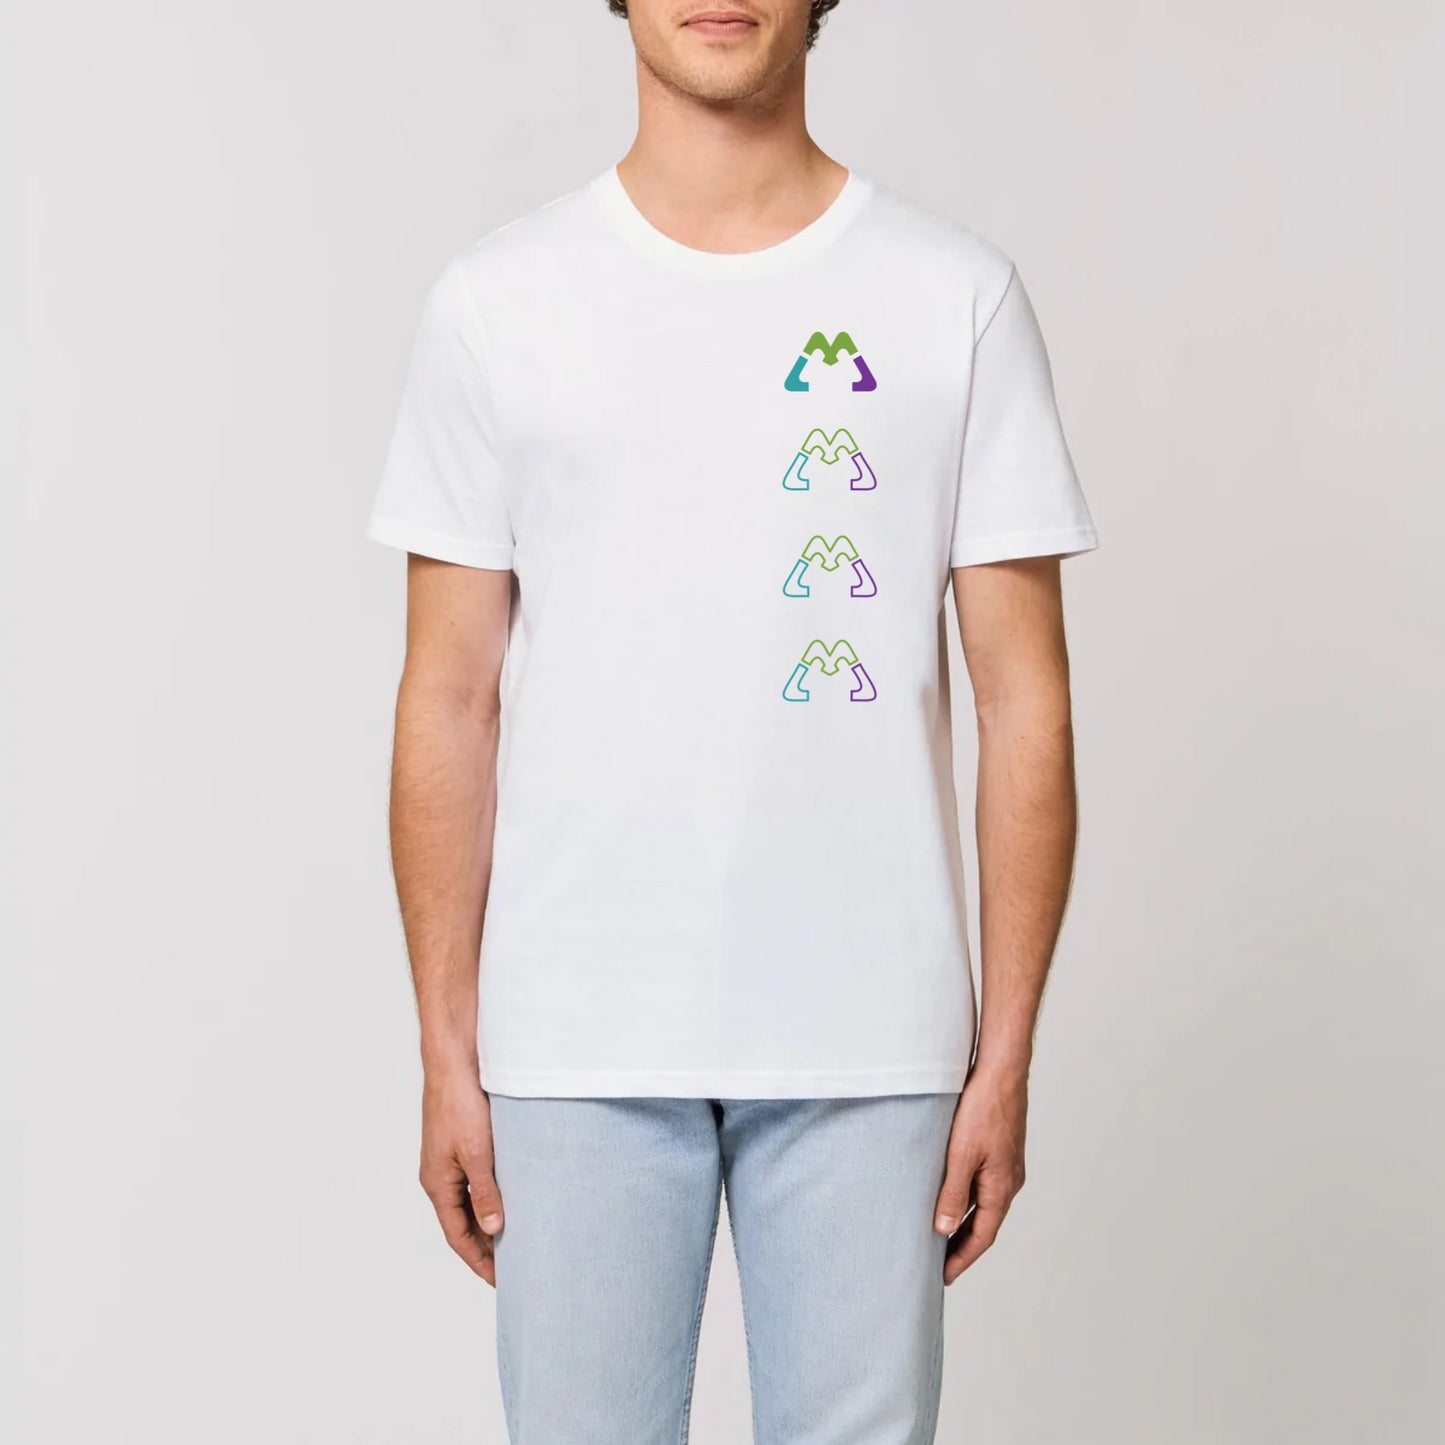 MMM — t-shirt, unisex, organic